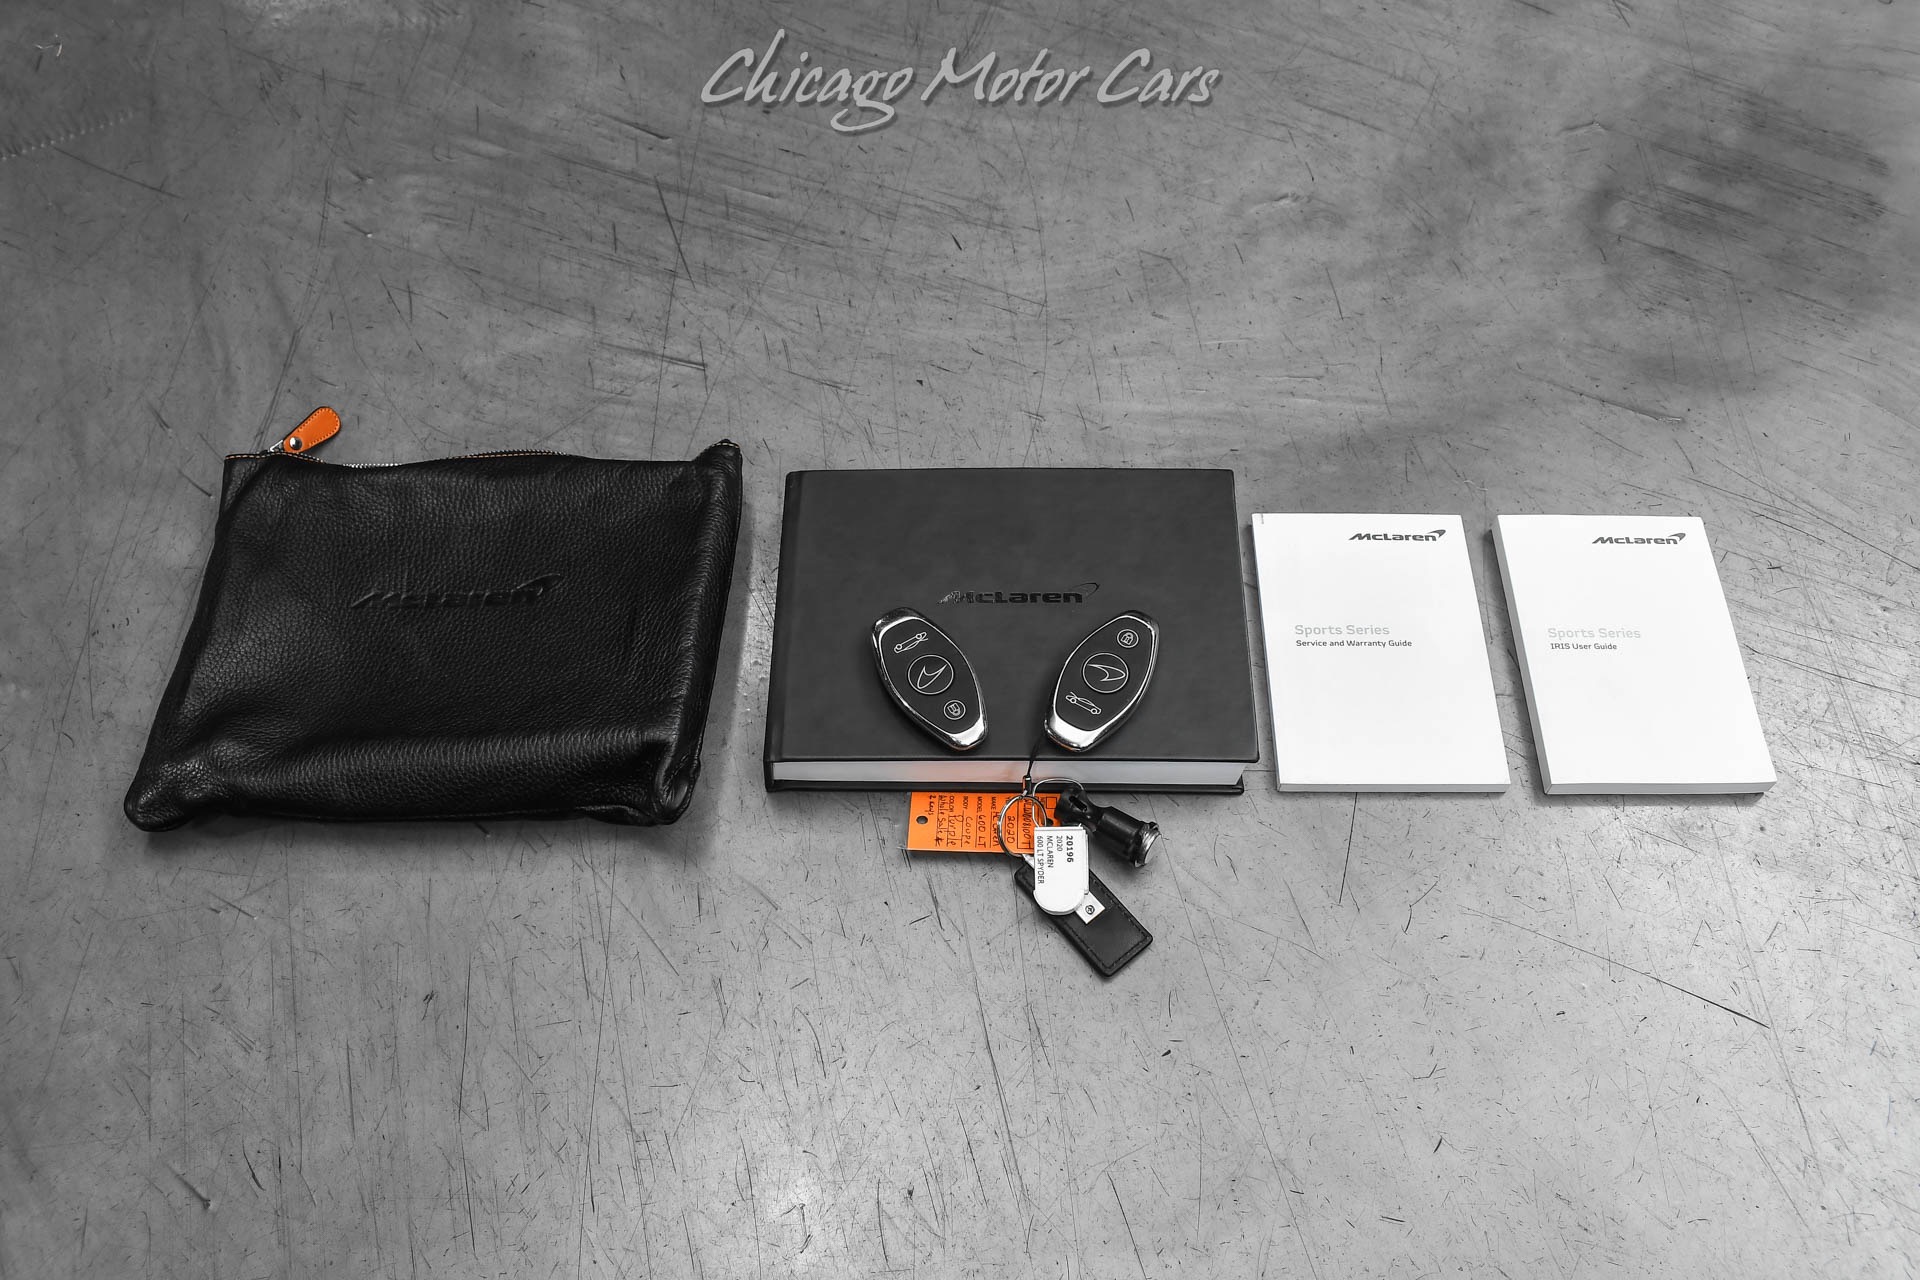 Brand Spotlight: The Spyder GT Collection - SportingLife Blog